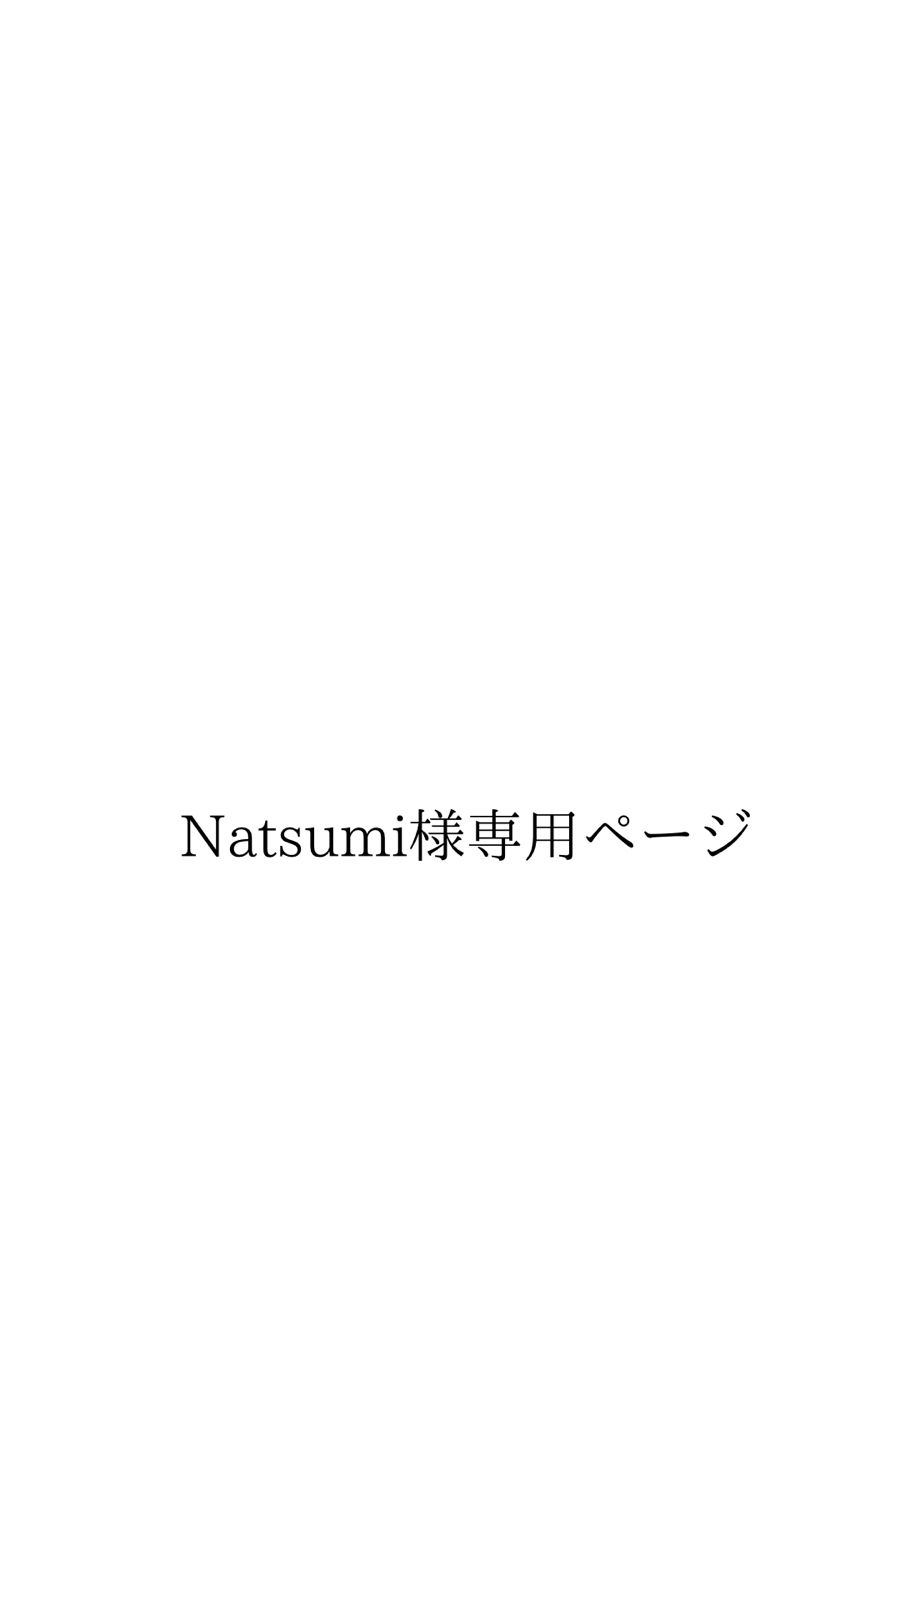 Natsumi様専用 - メルカリ